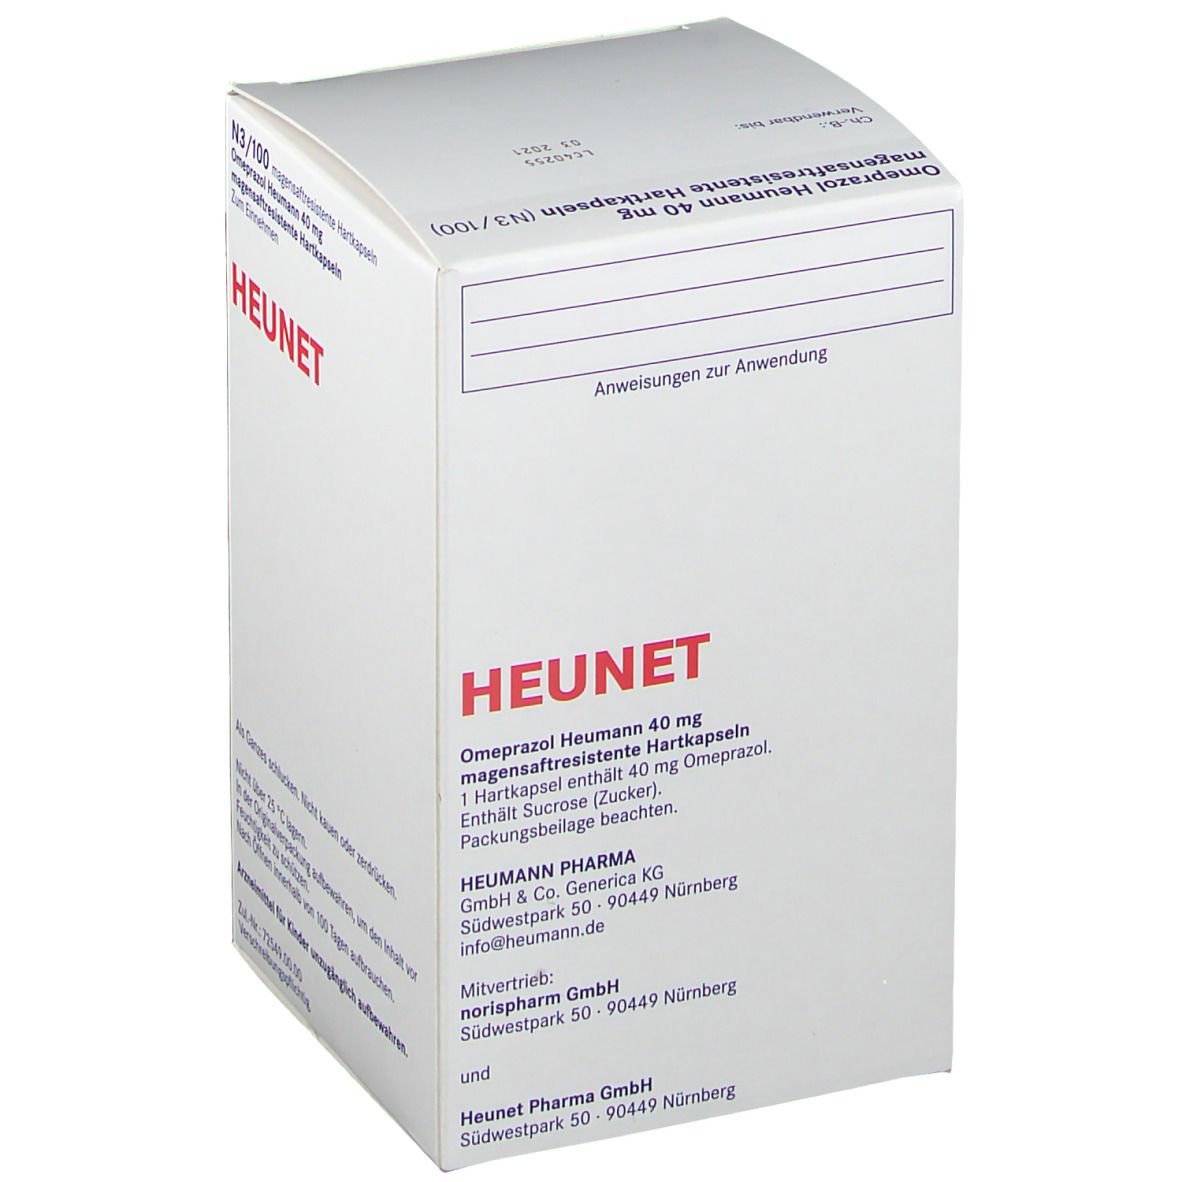 Omeprazol Heumann 40 mg